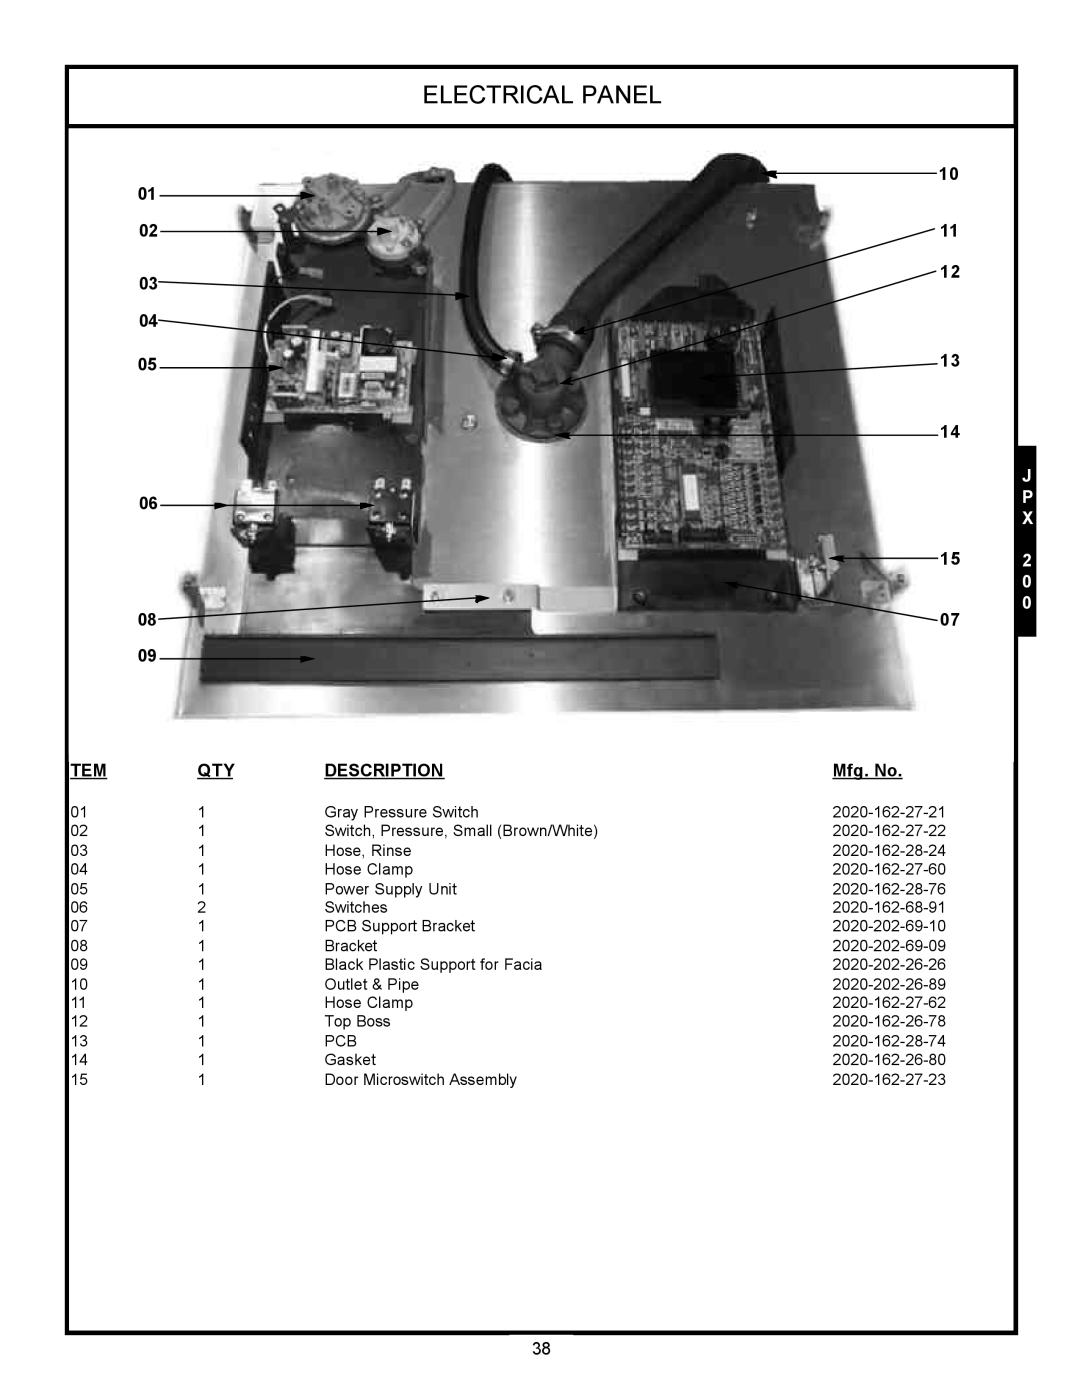 Jackson jpx-140, JPX-200, JPX-160 service manual 06 P, Electrical Panel, Description, Mfg. No 